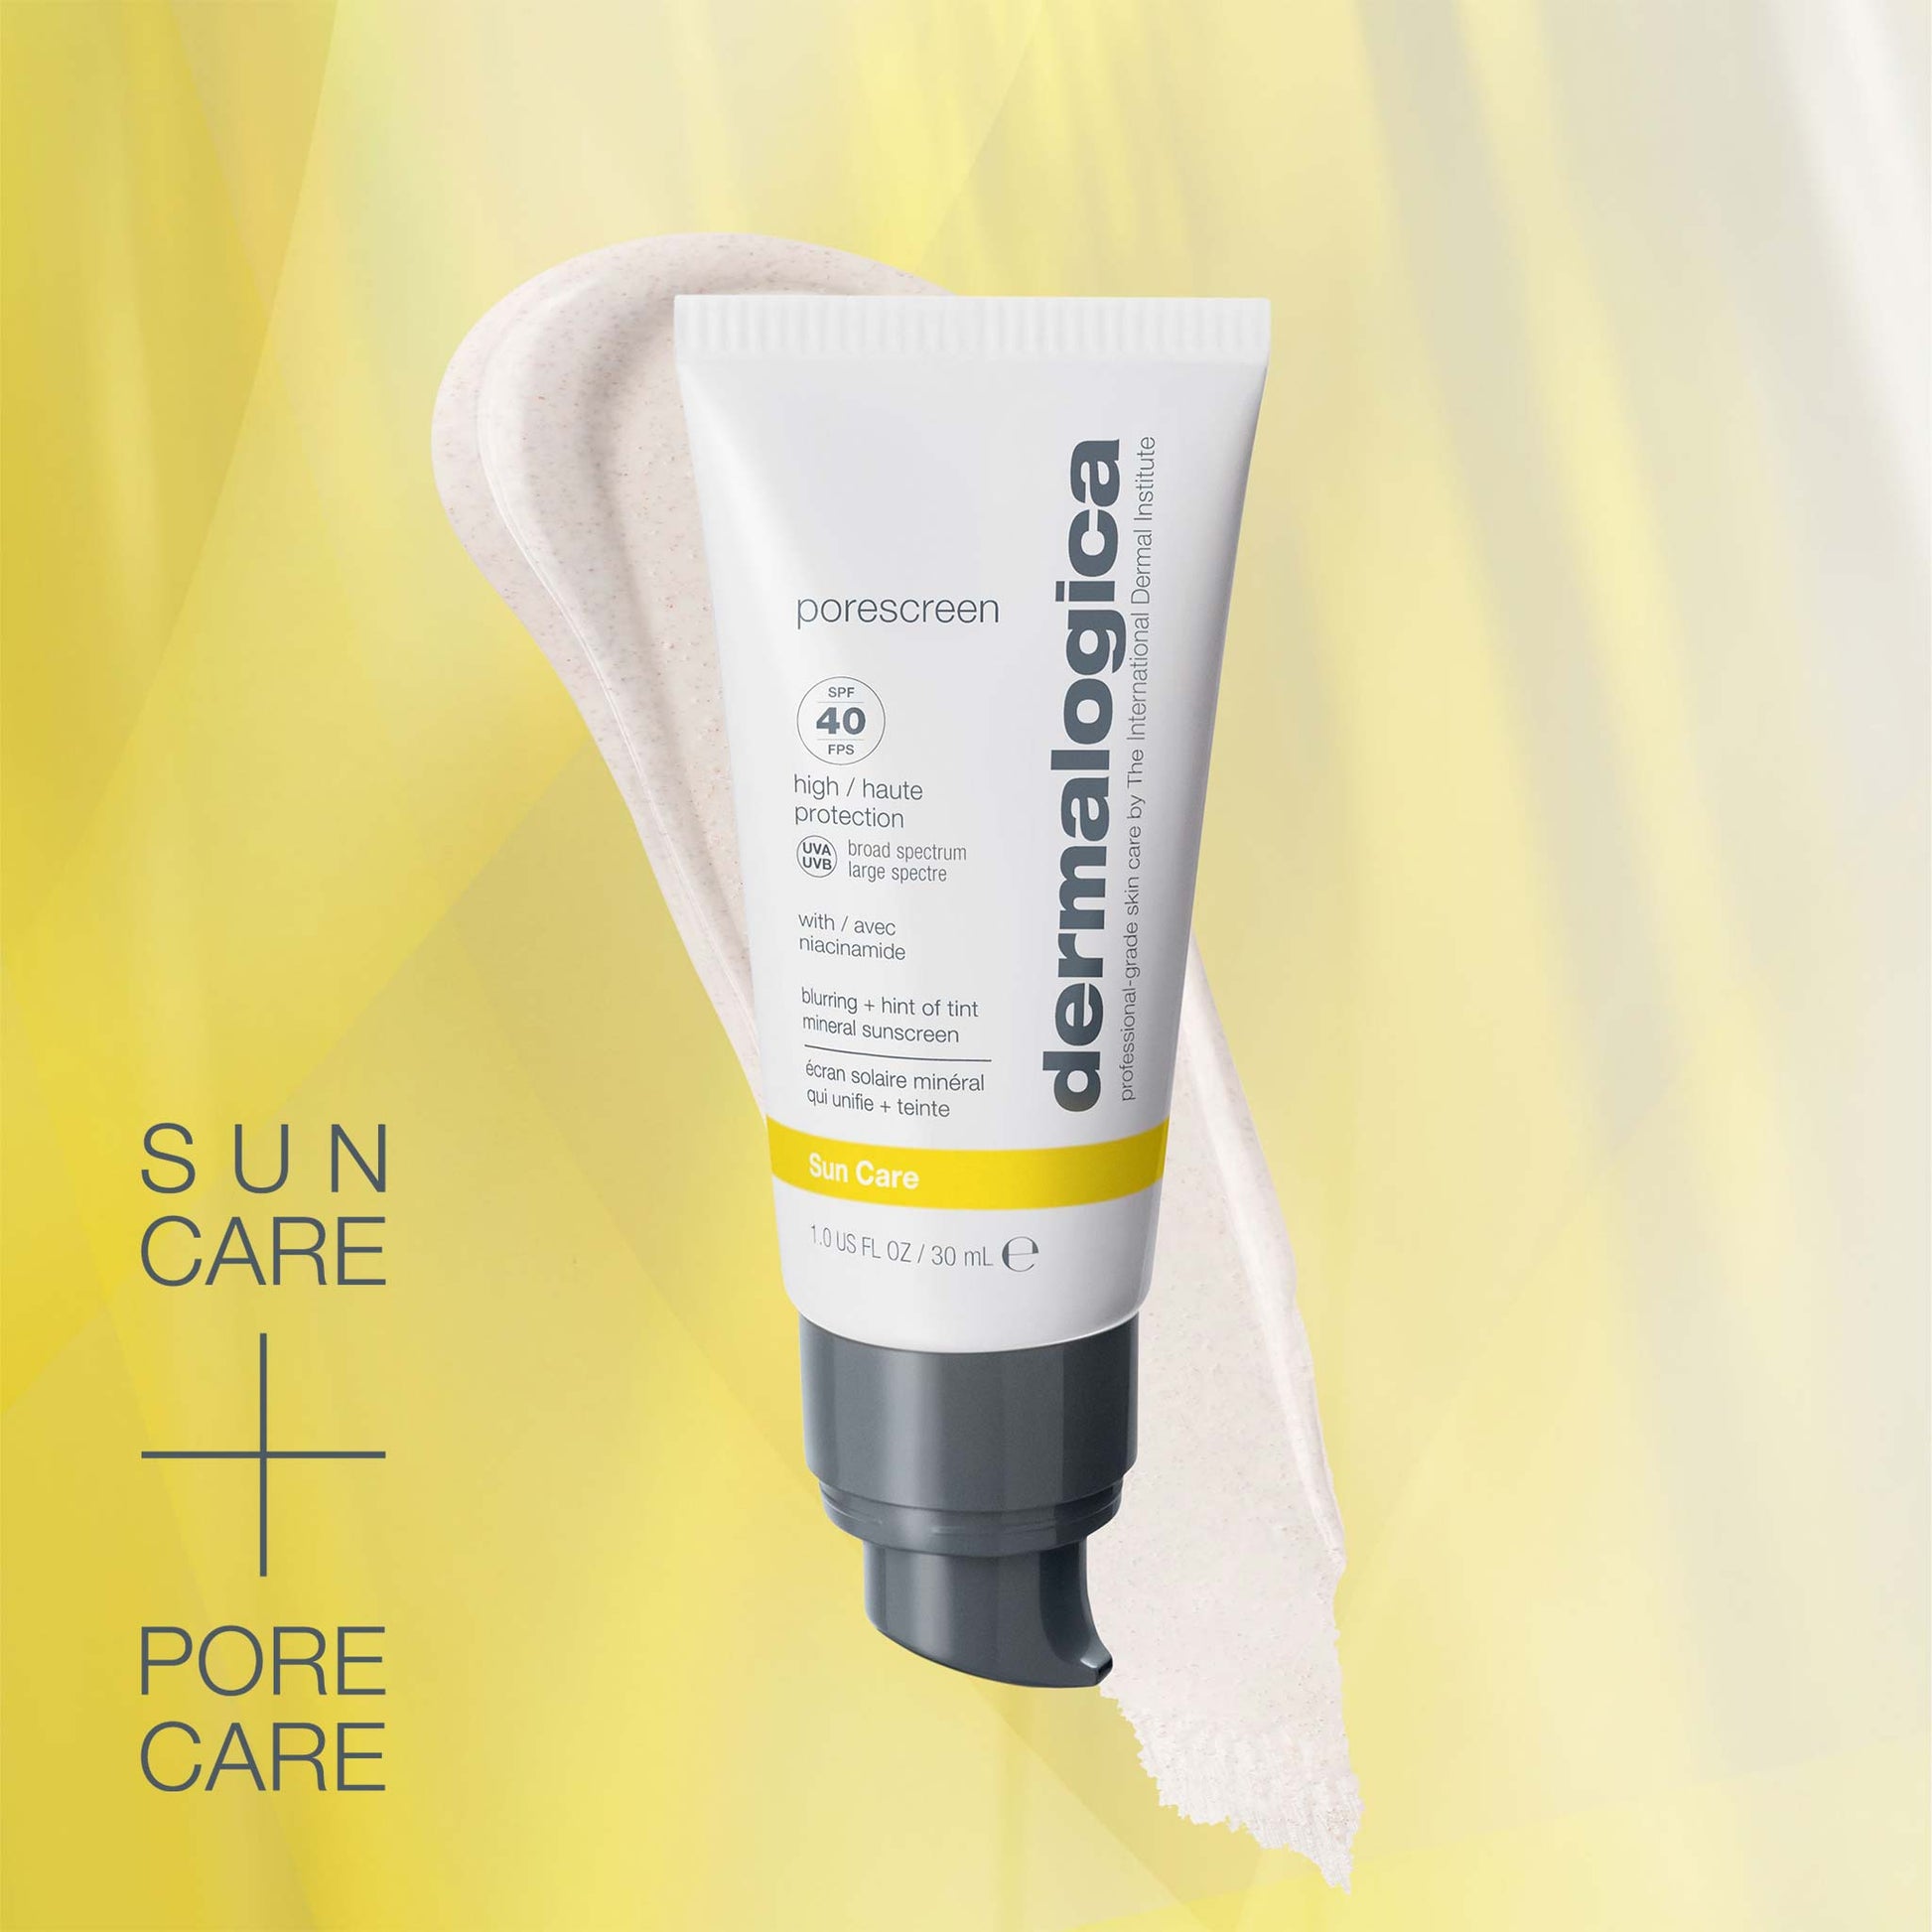 porescreen spf40 hero image sun care + pore care